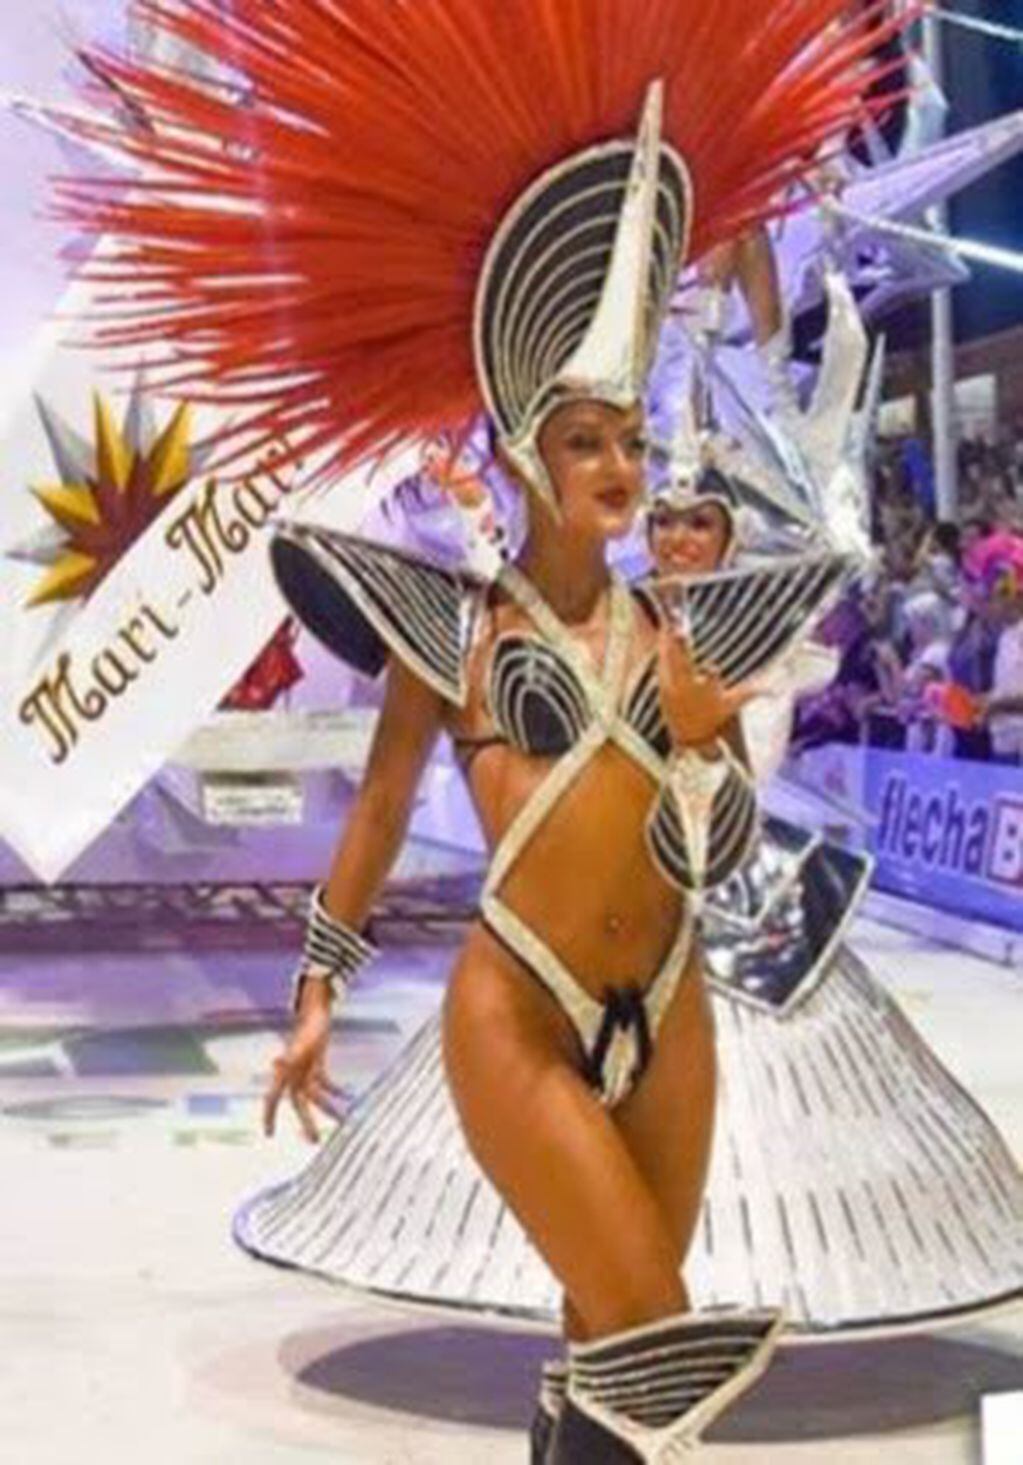 Agustina Nozzi
Crédito: Carnaval del País